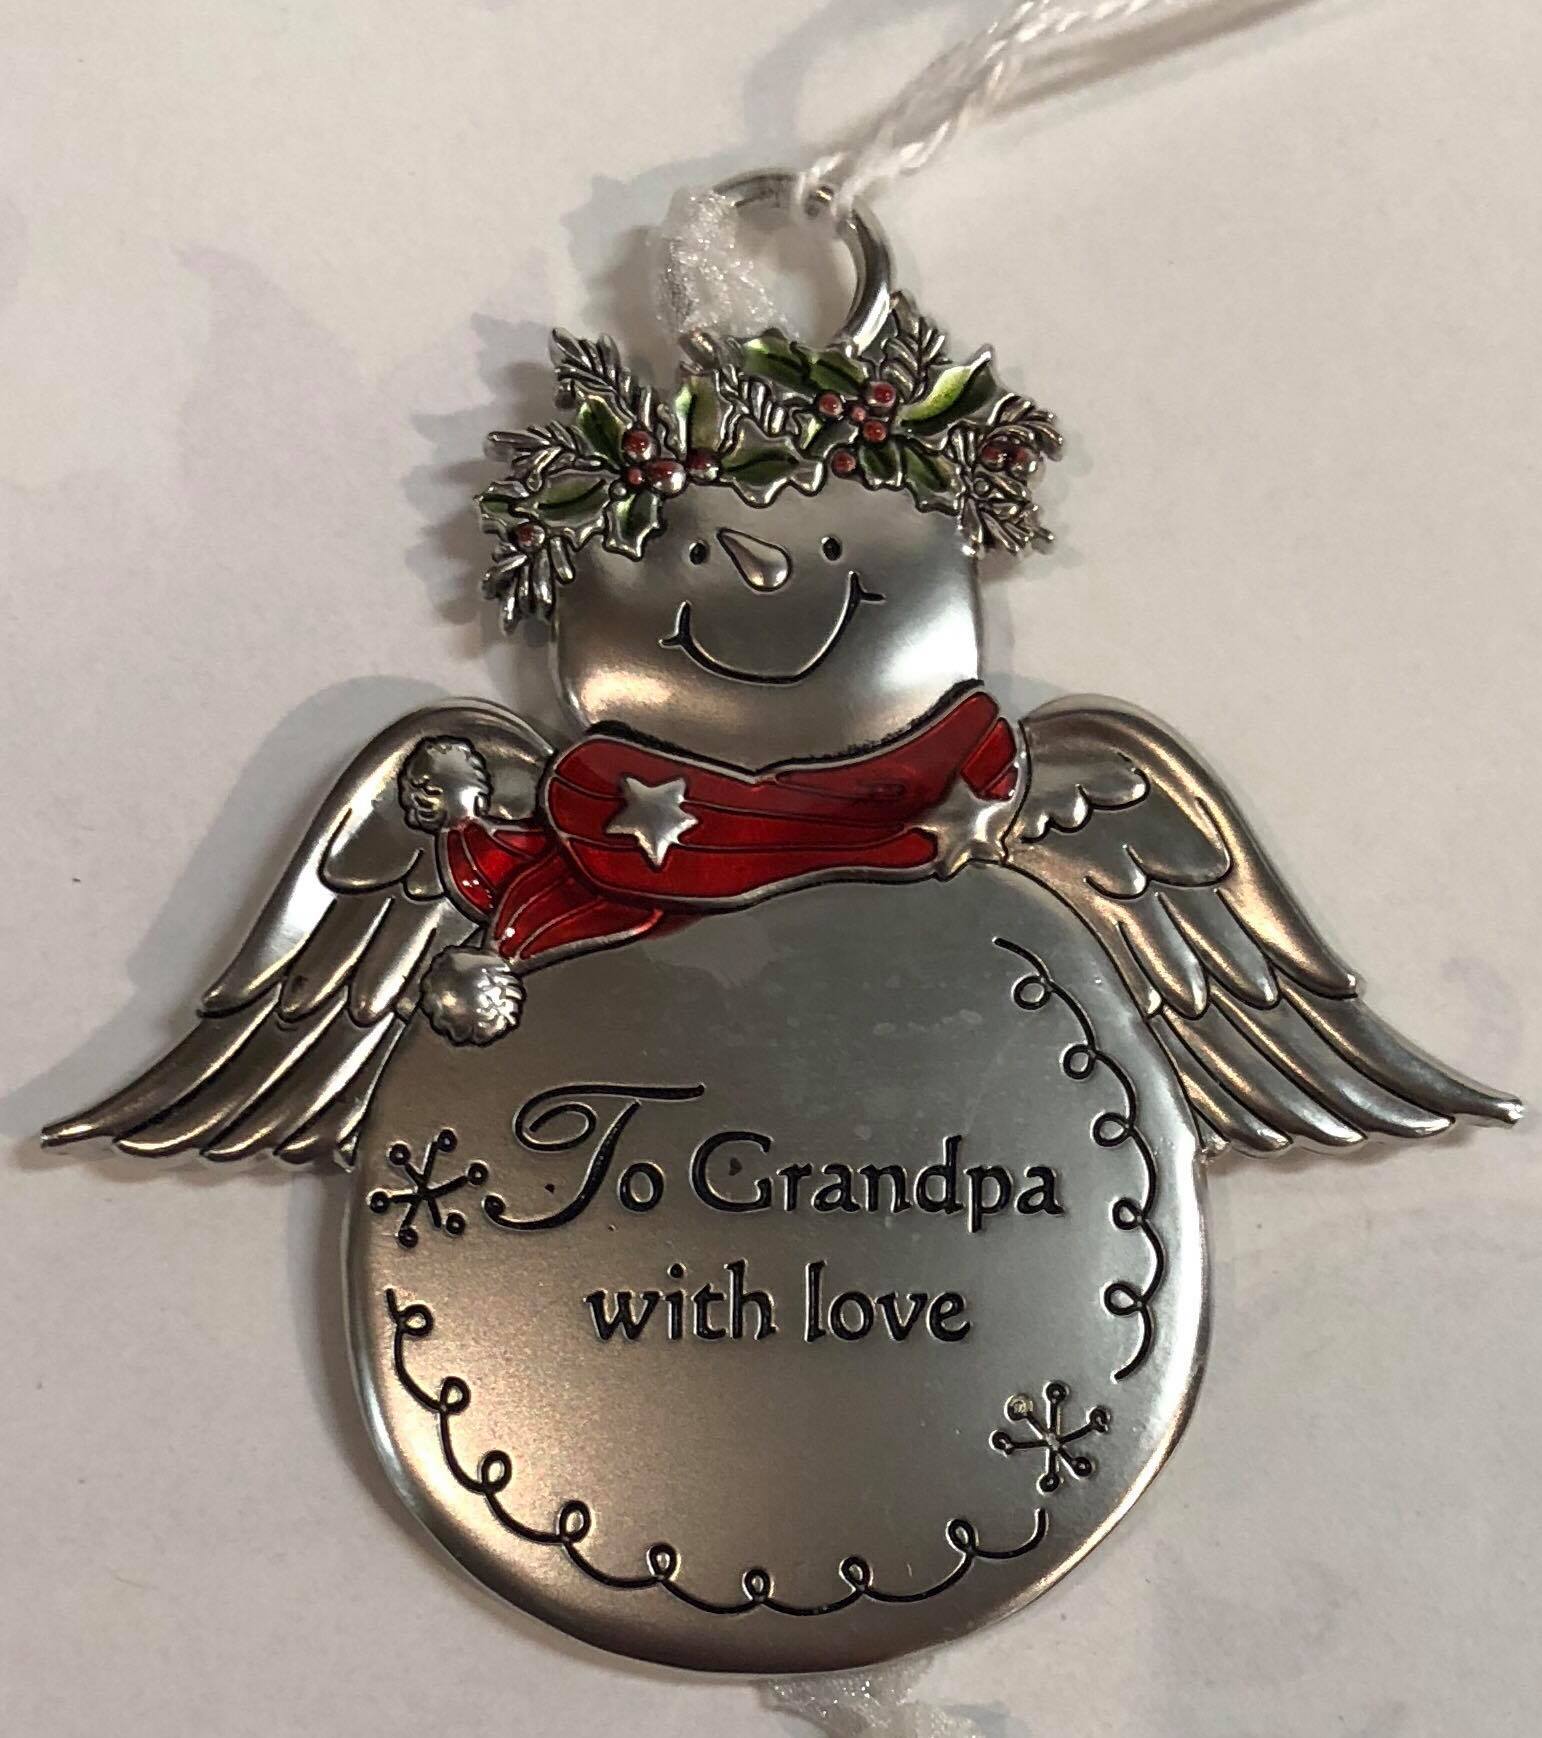 Snowman Angel Tree Ornament "To Grandpa With Love"